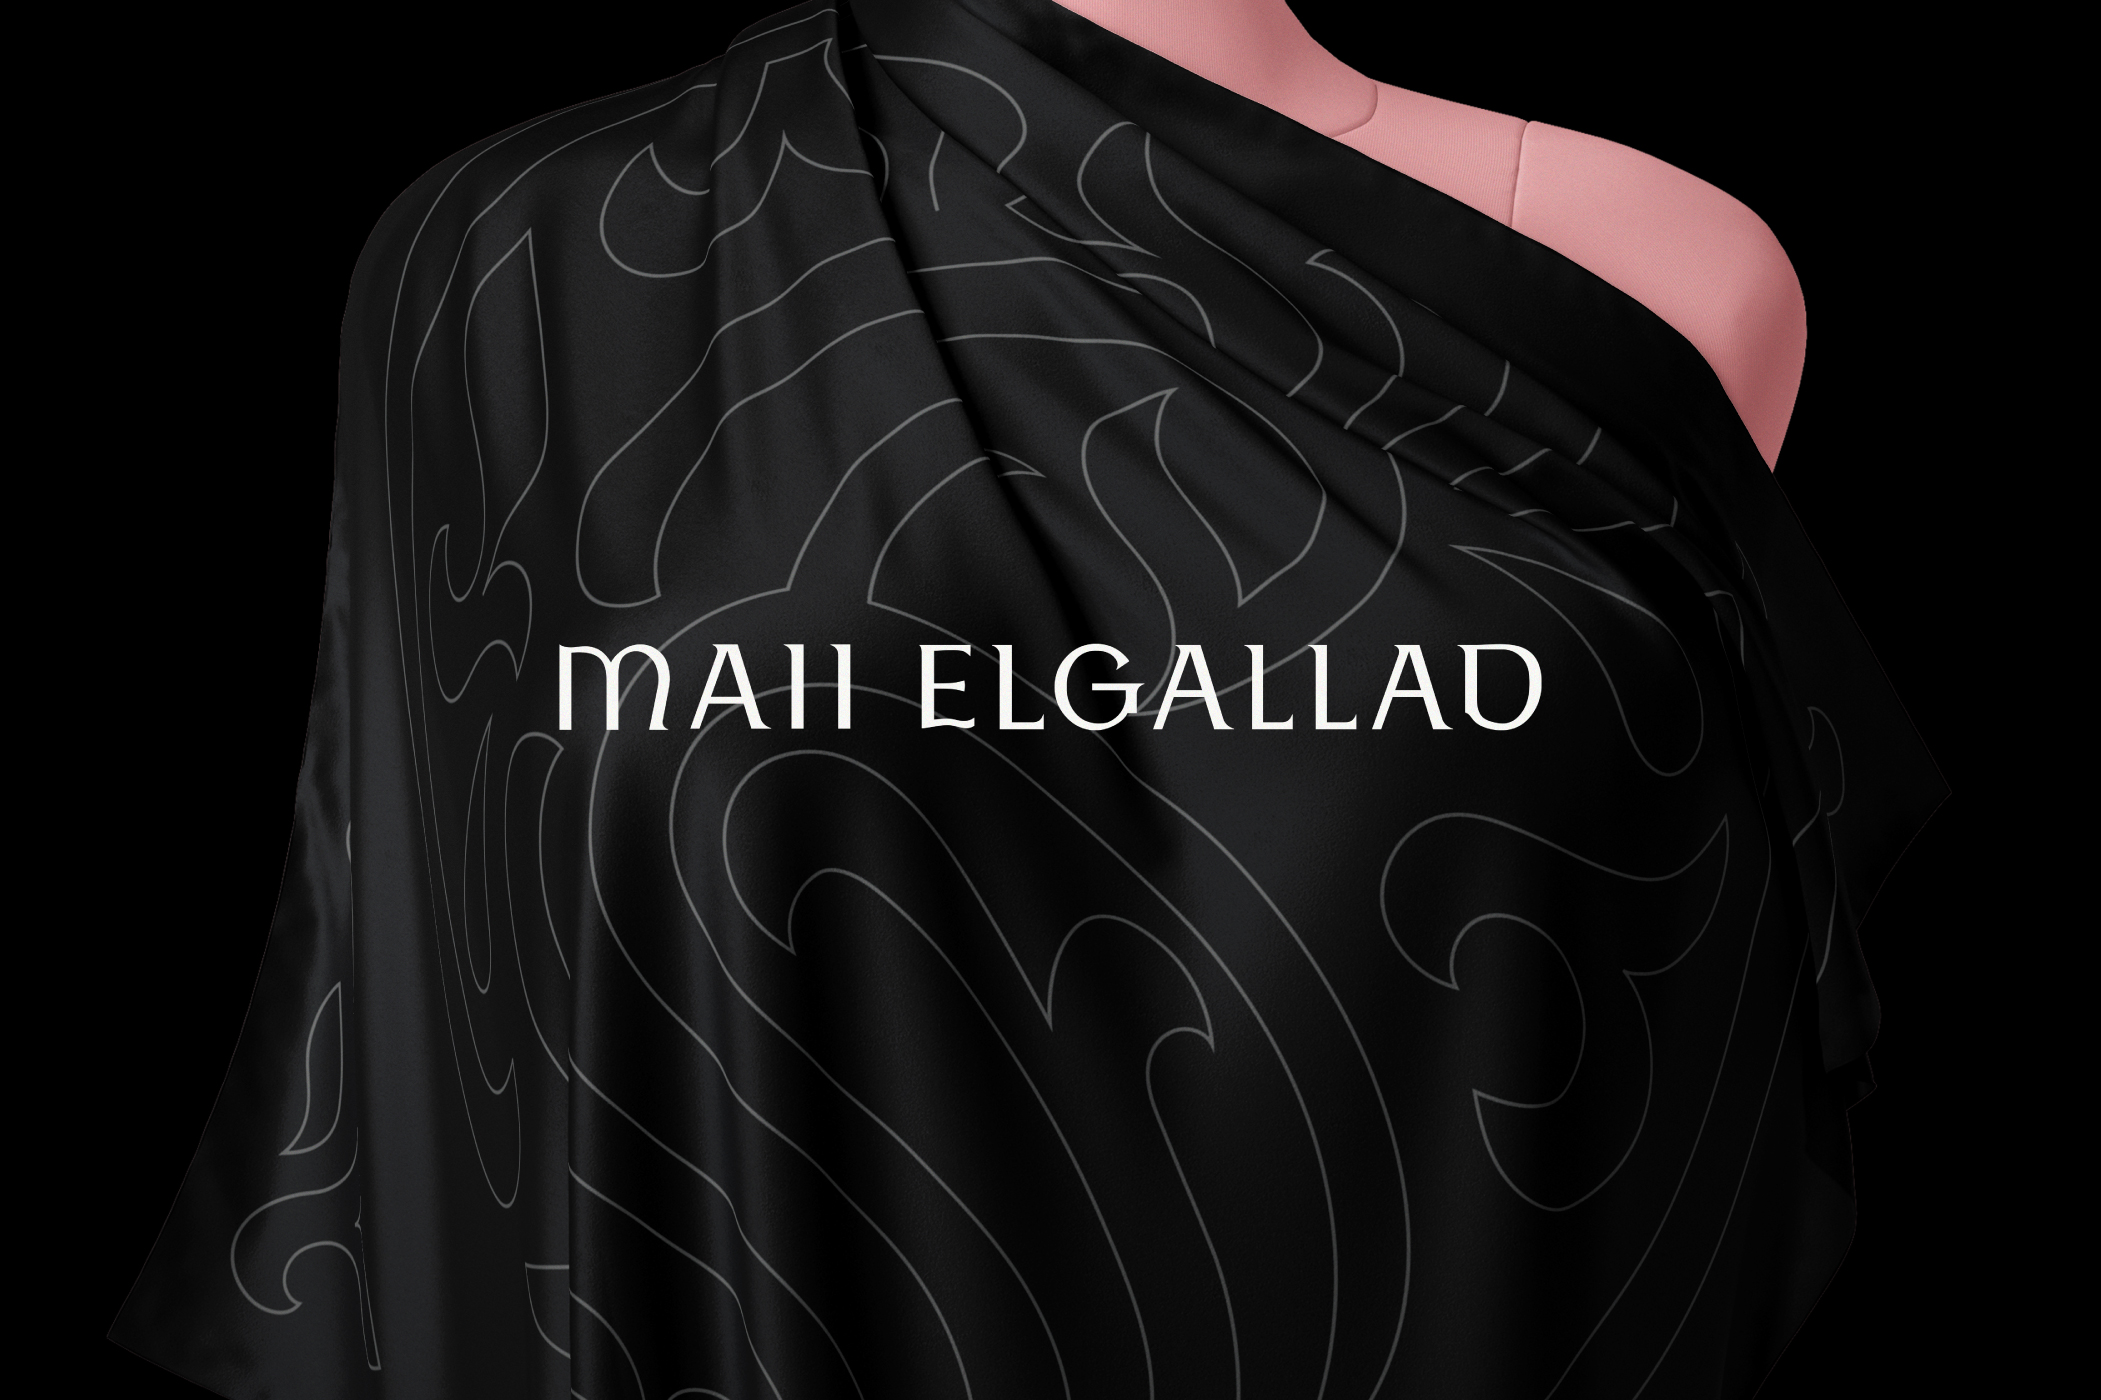 Maii Elgallad Brand Identity by Iliraqi